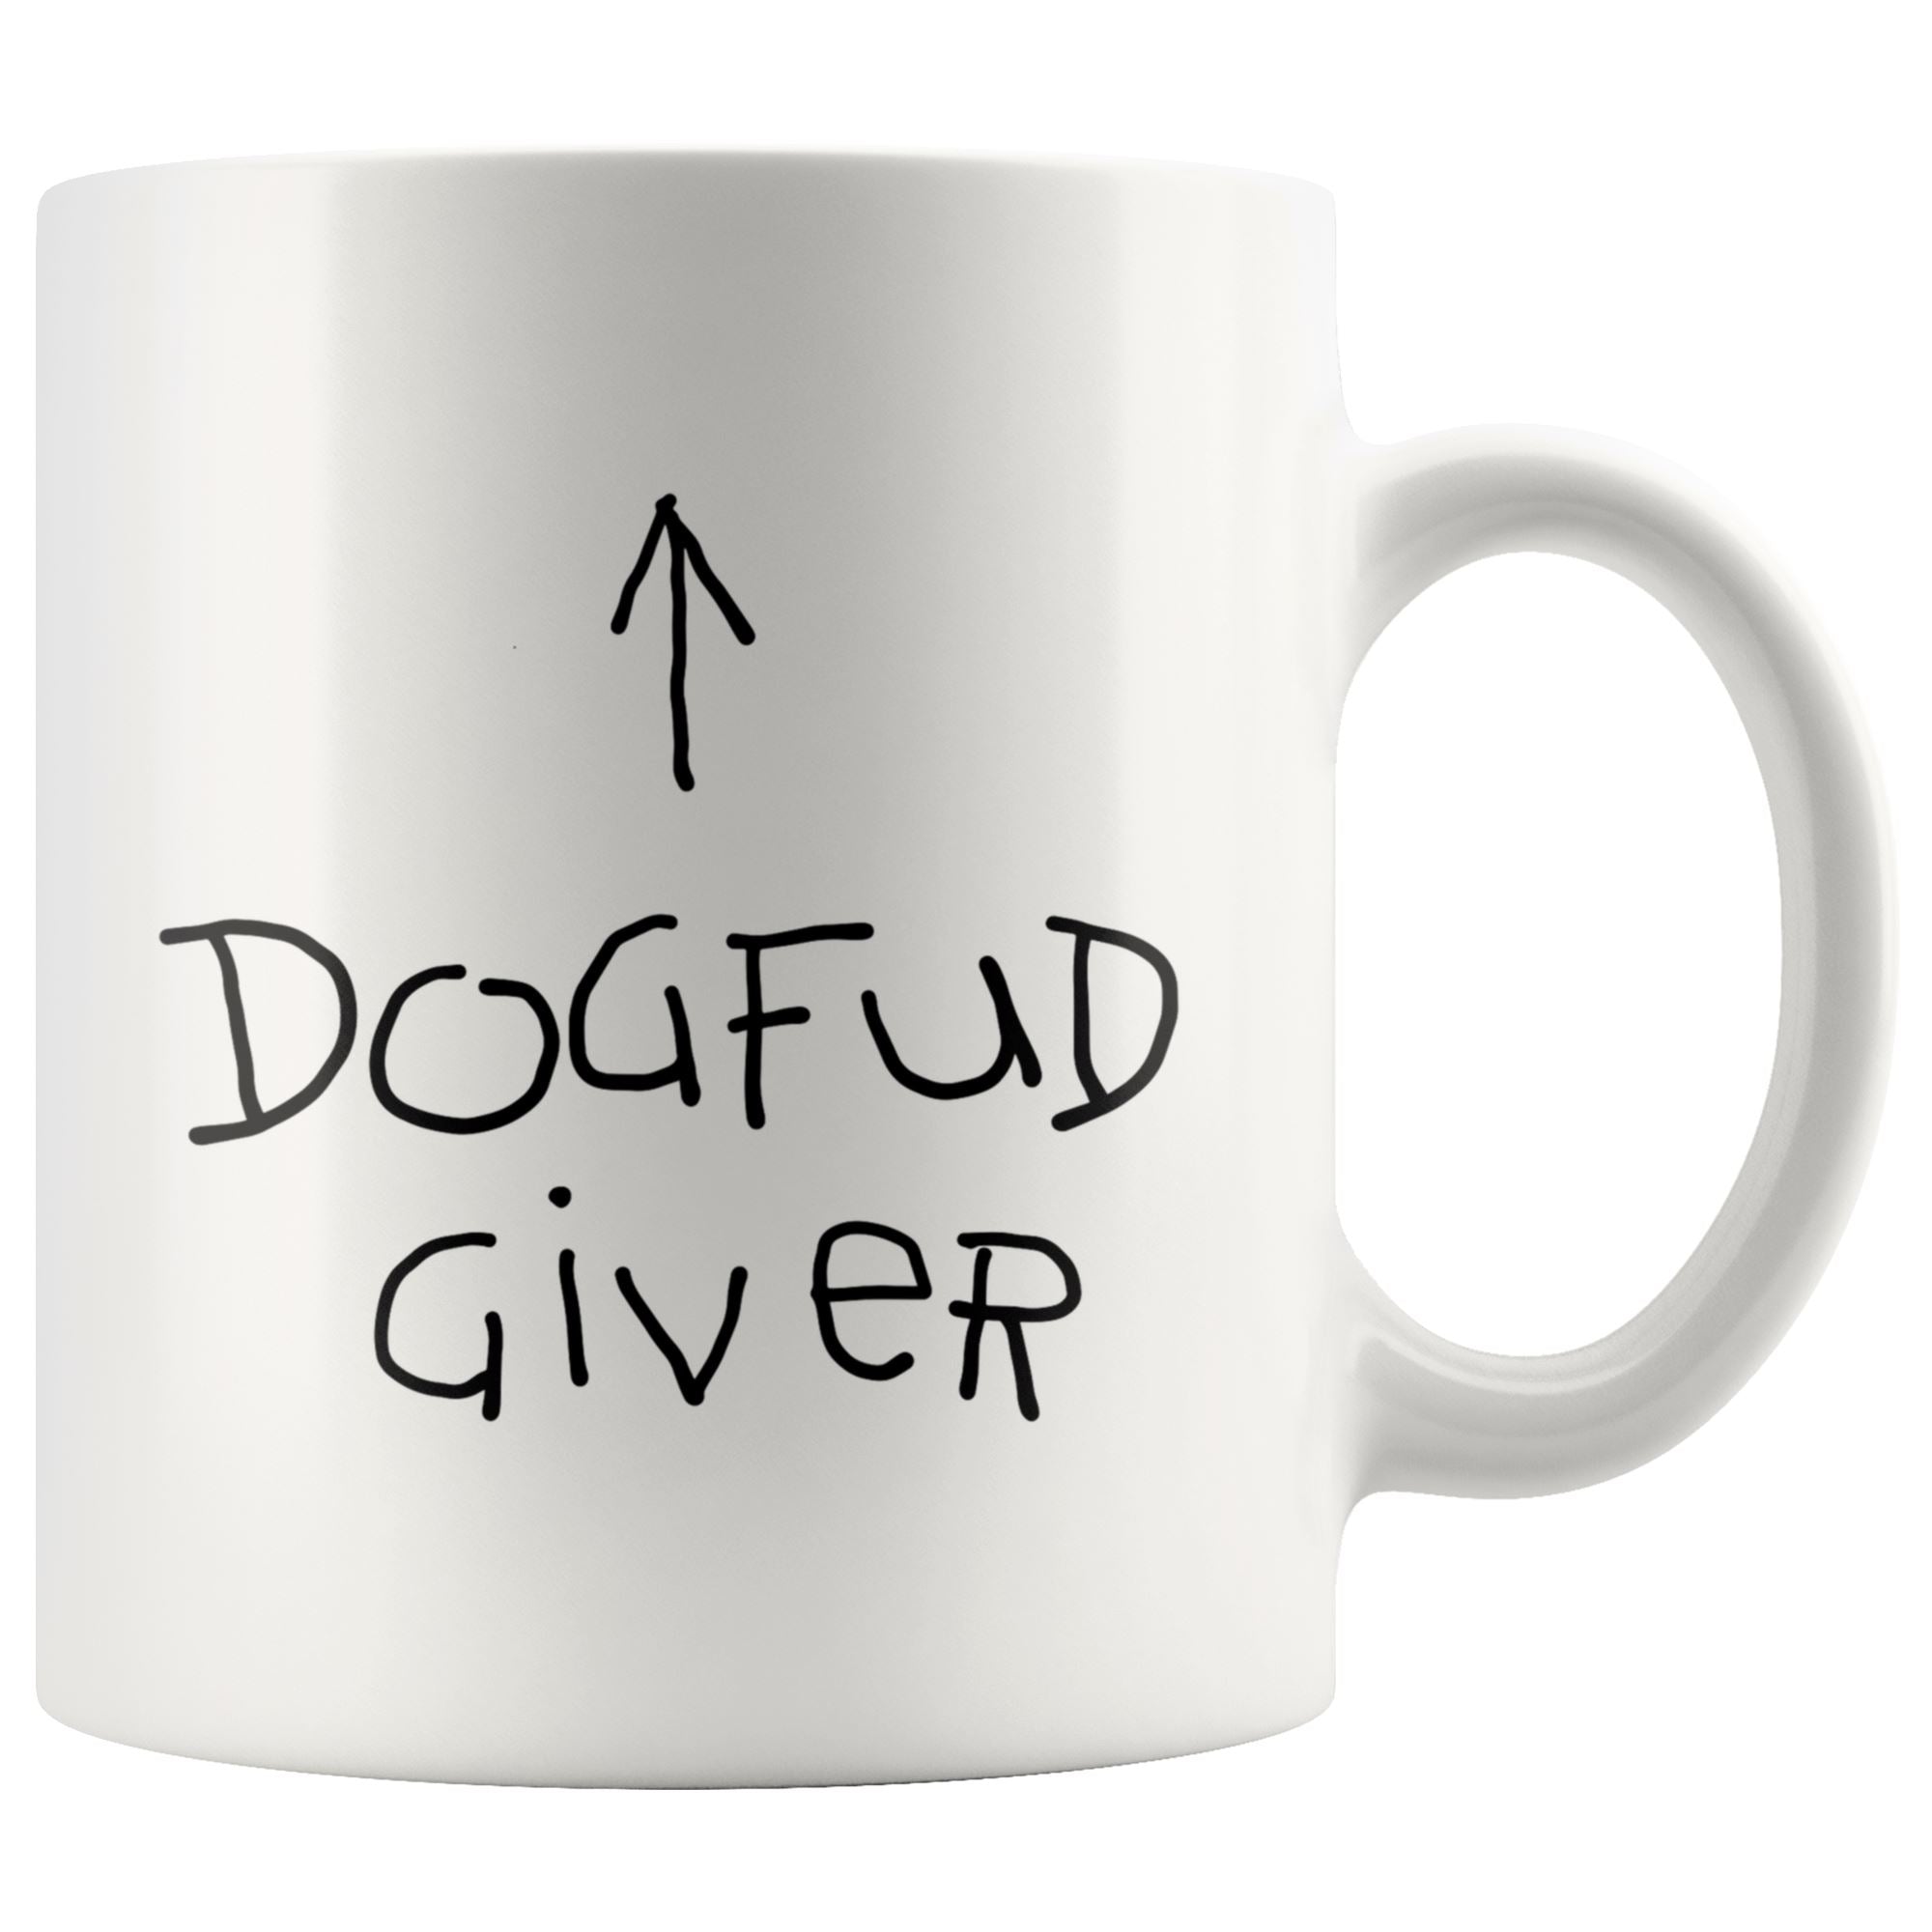 Dogfud Giver Mug Drinkware teelaunch 11oz Mug 